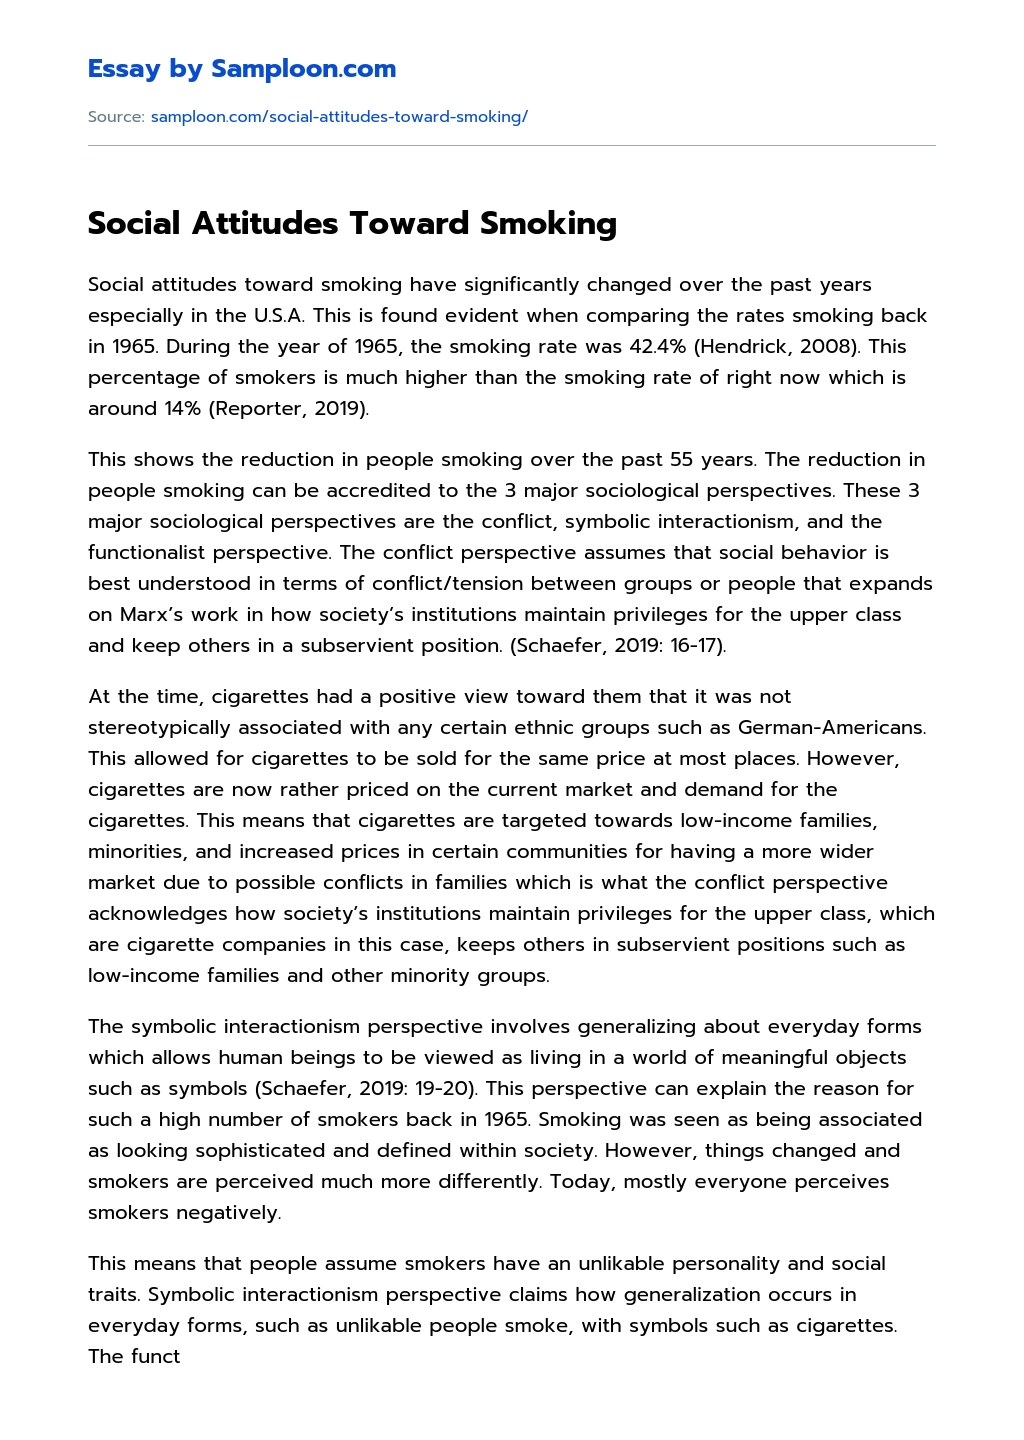 Social Attitudes Toward Smoking essay